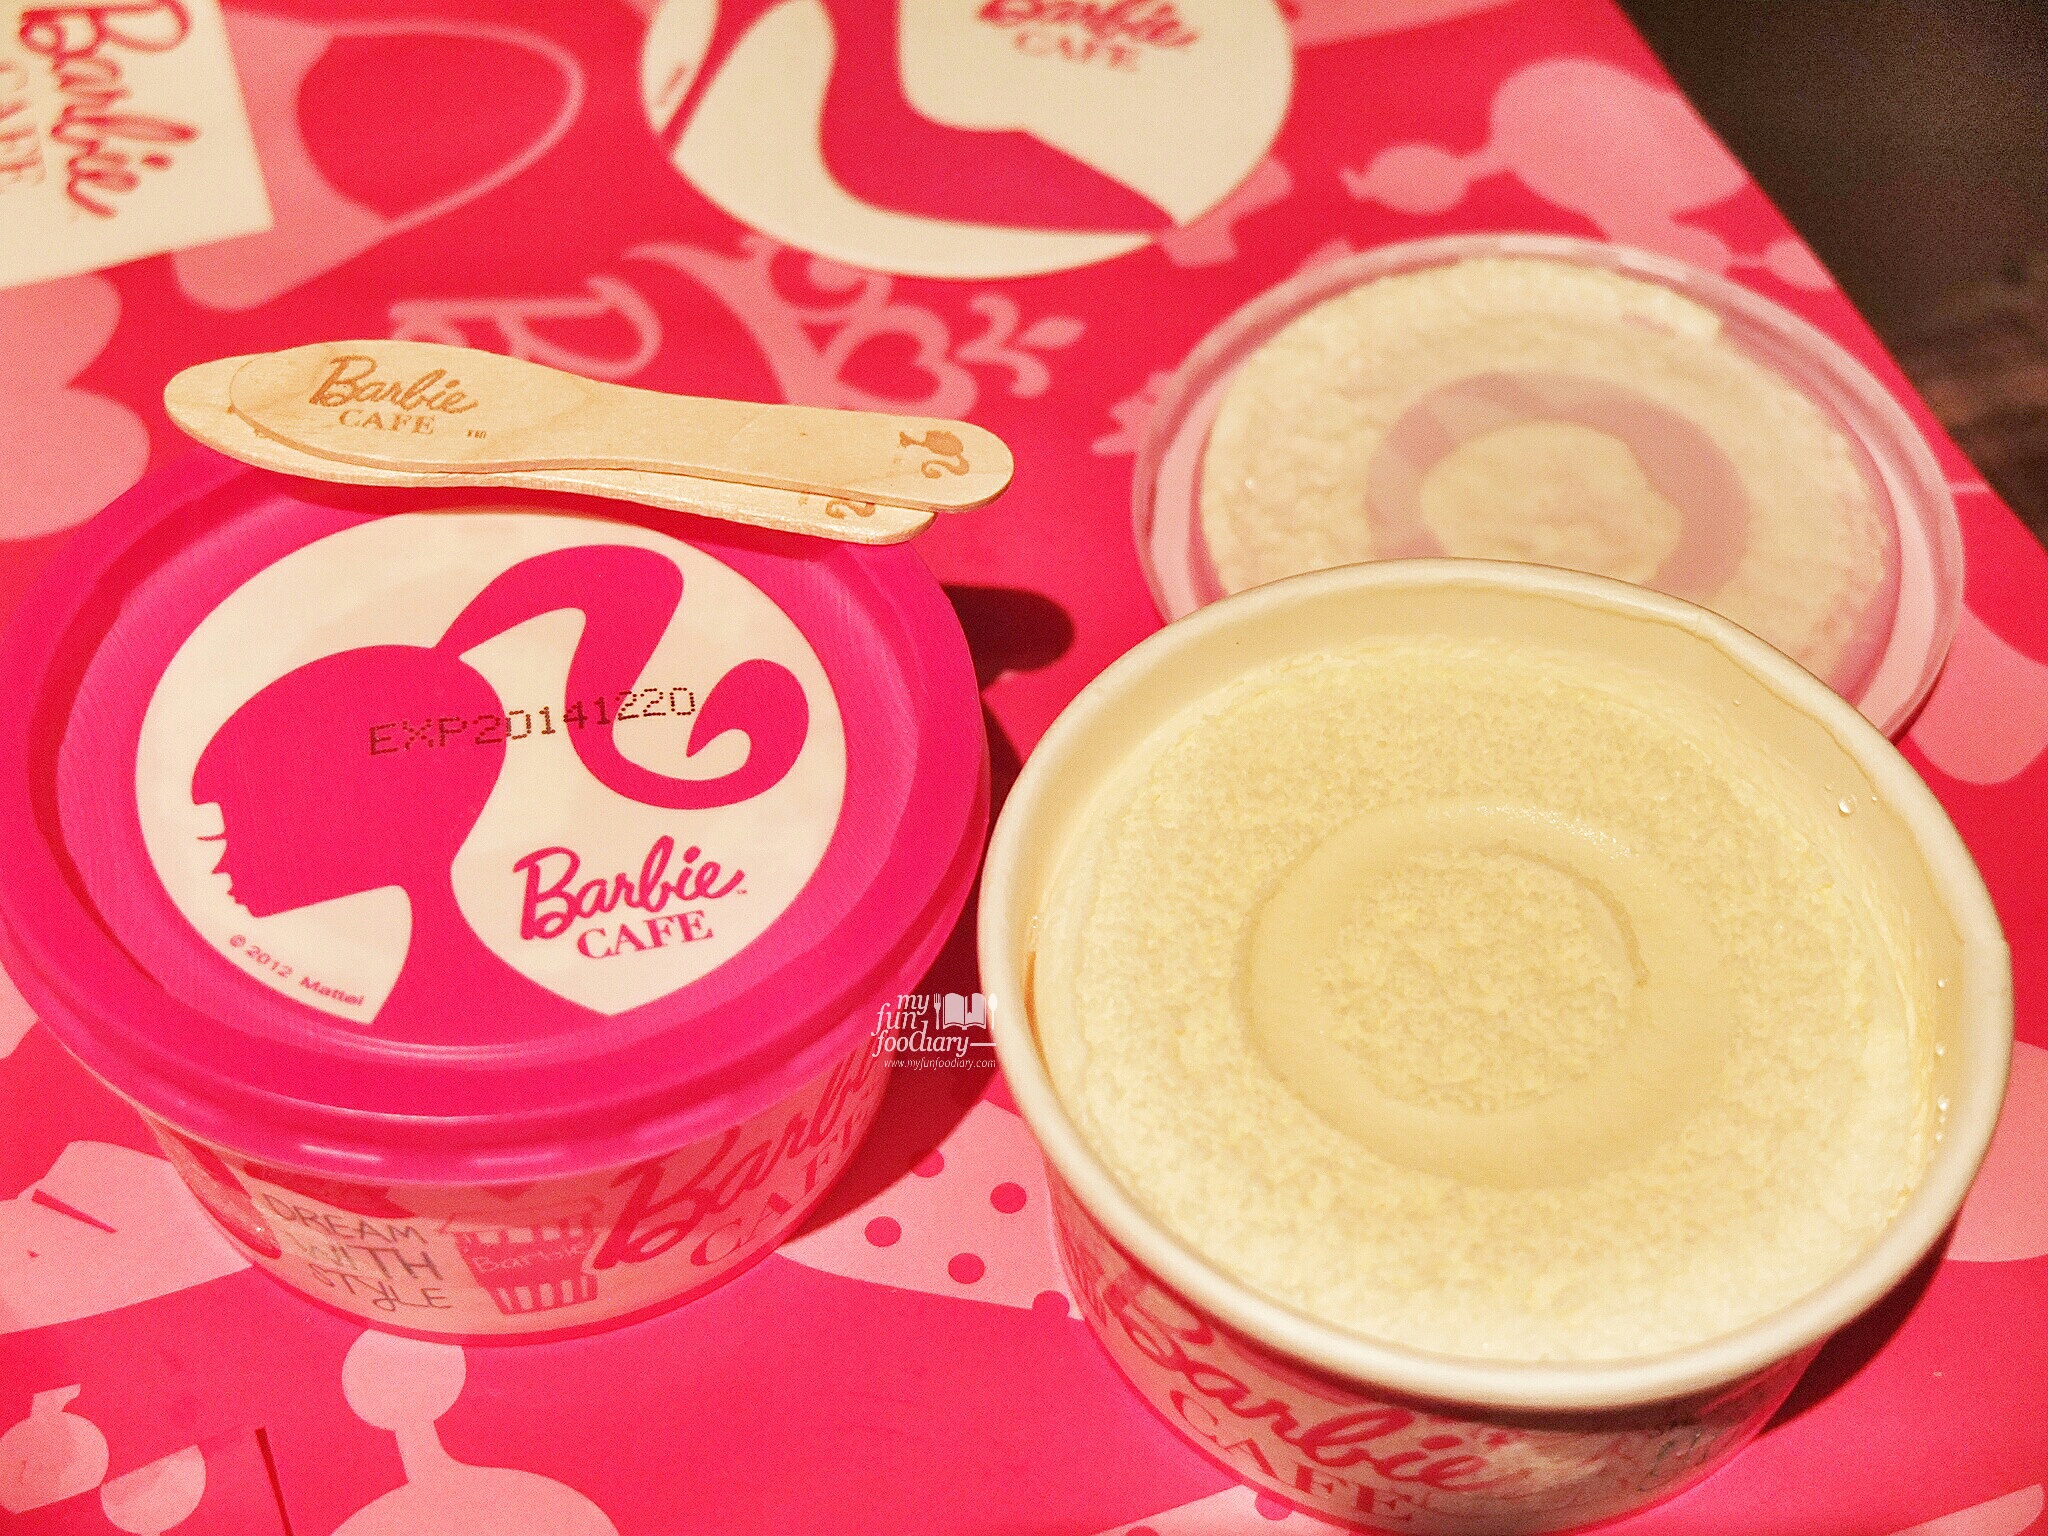 Barbie Ice Cream at Barbie Cafe Taiwan by Myfunfoodiary